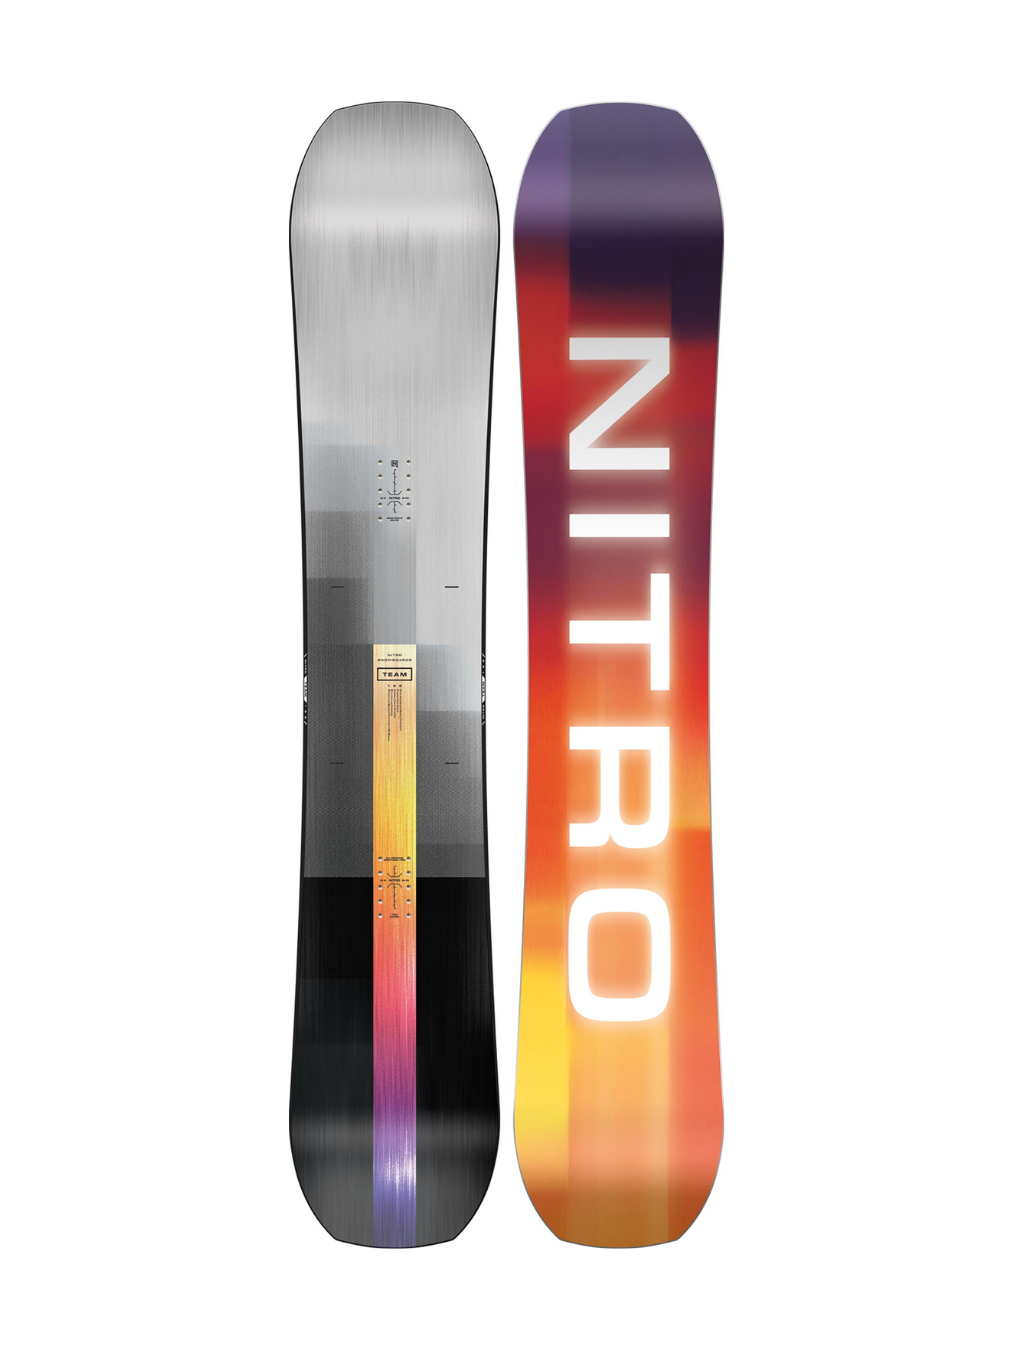 Nitro Team 2024 Snowboard